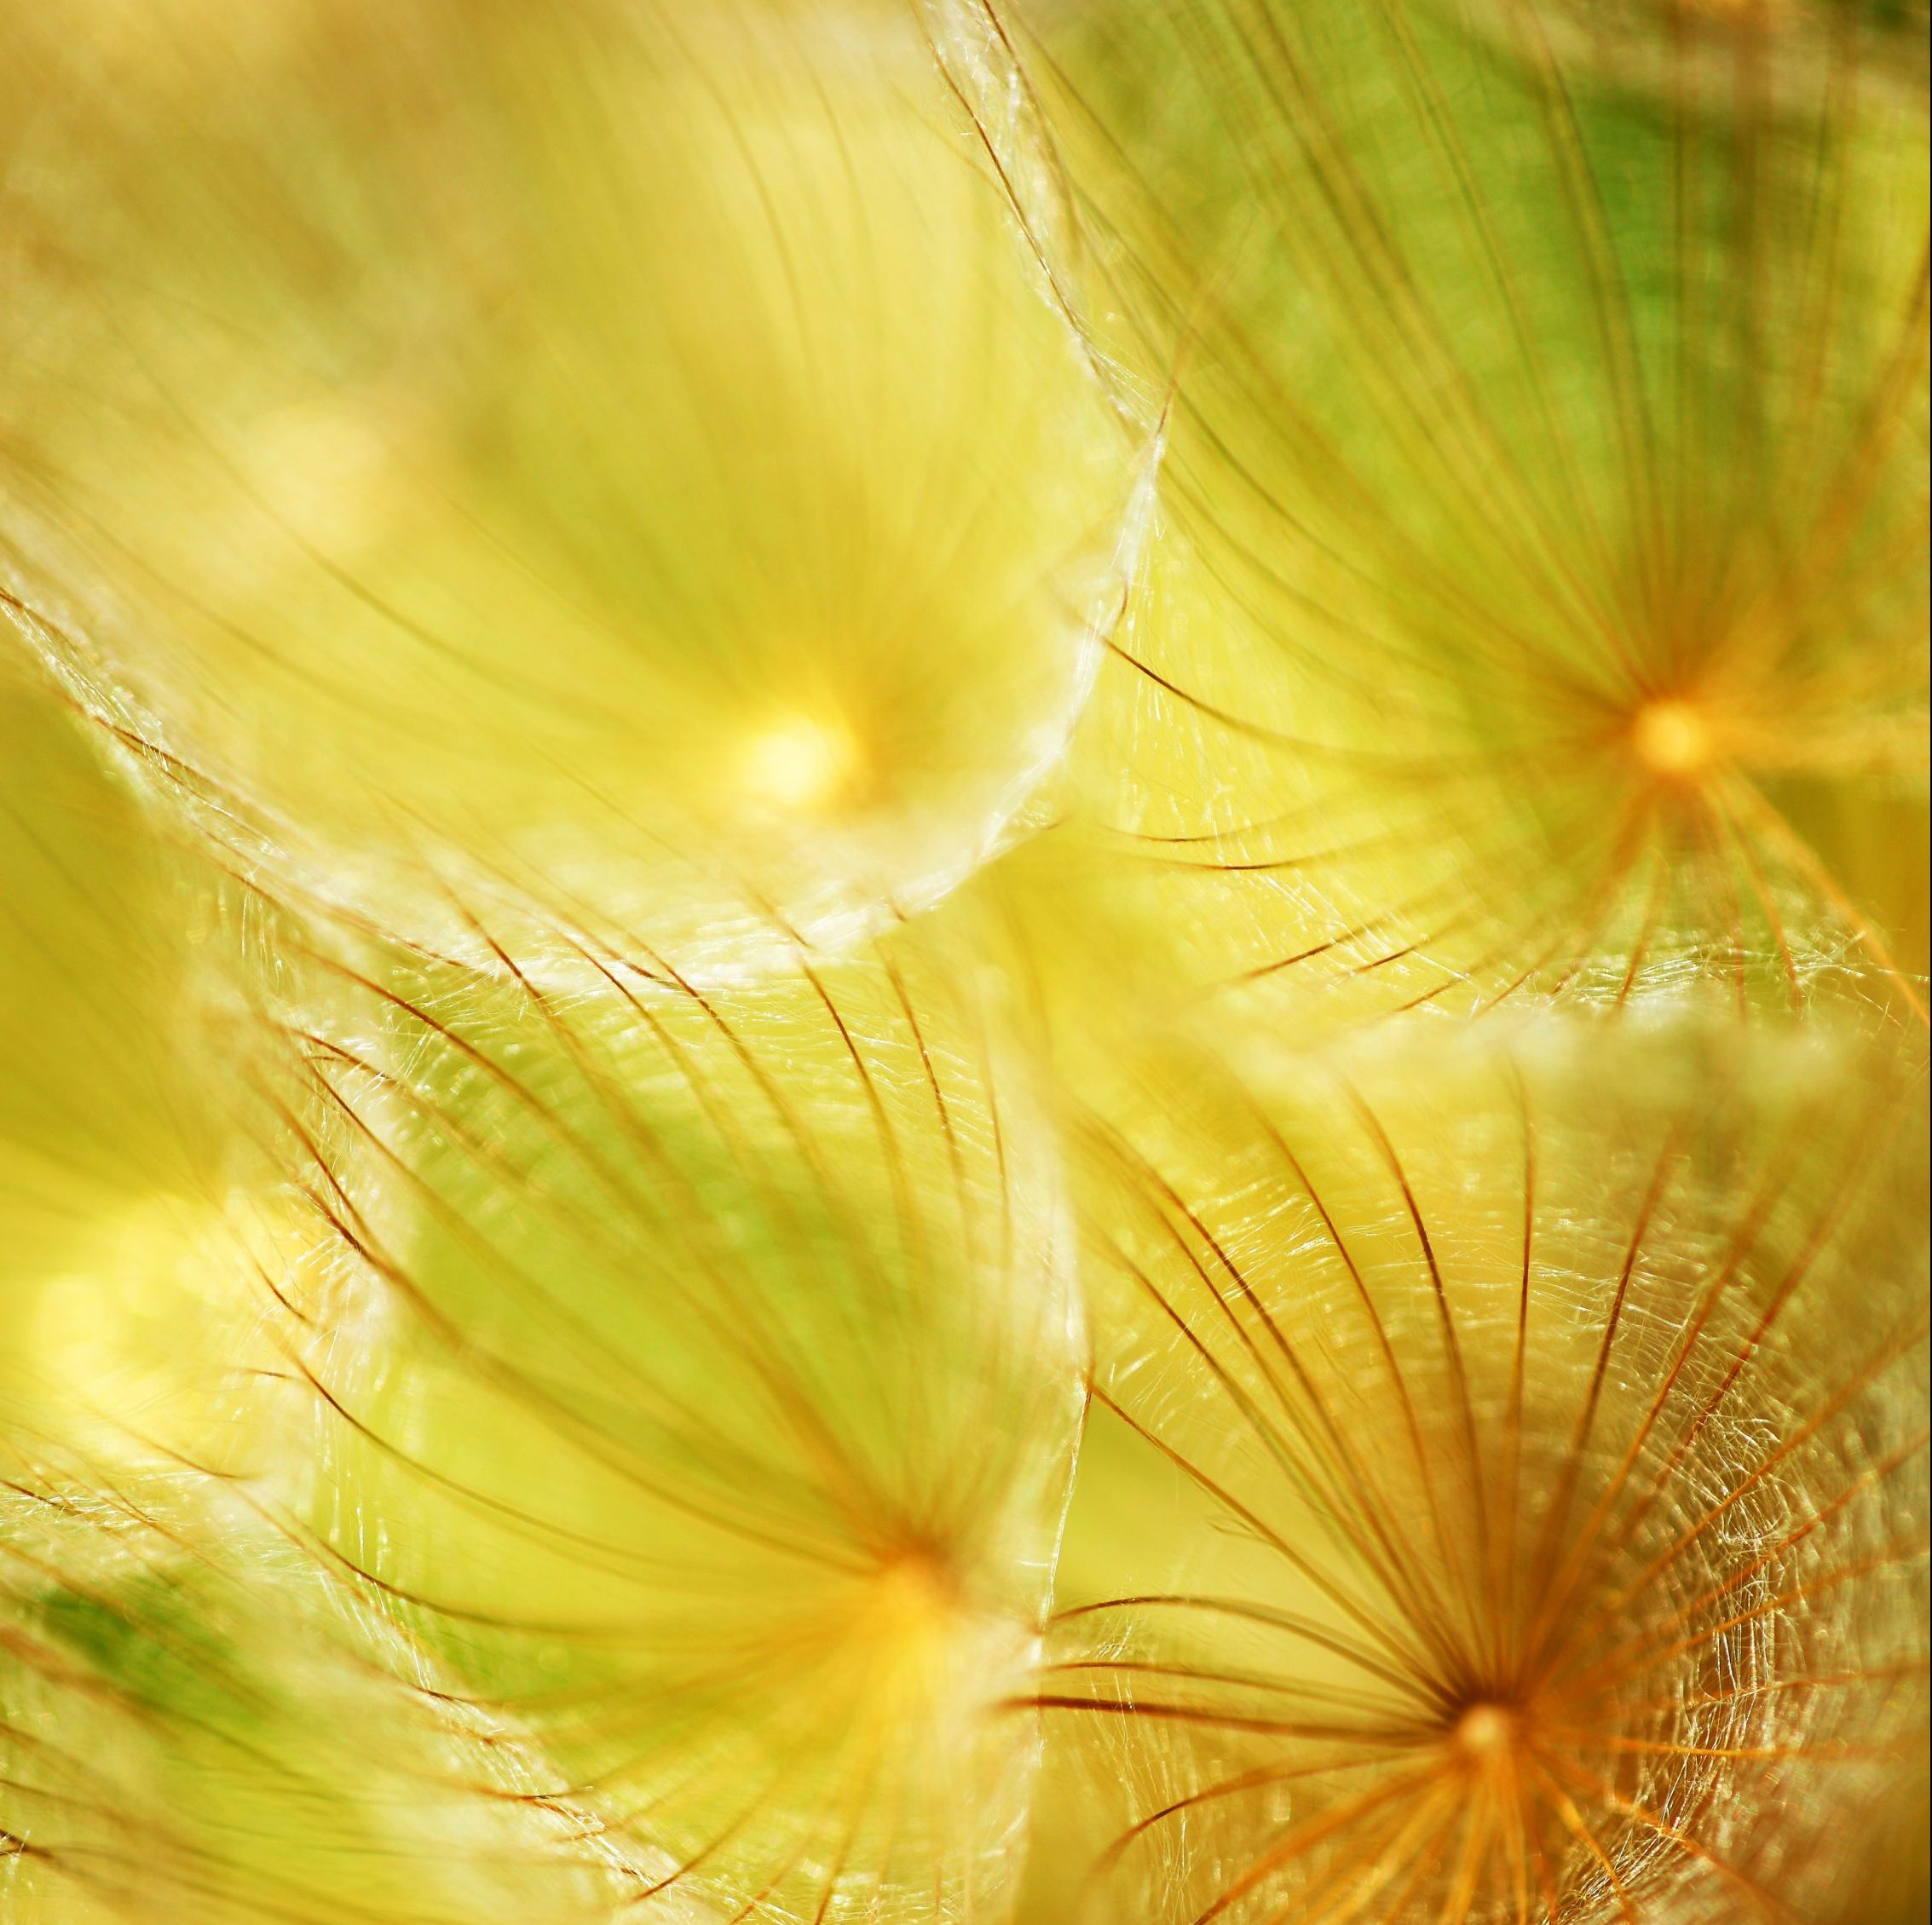 Soft dandelion flower